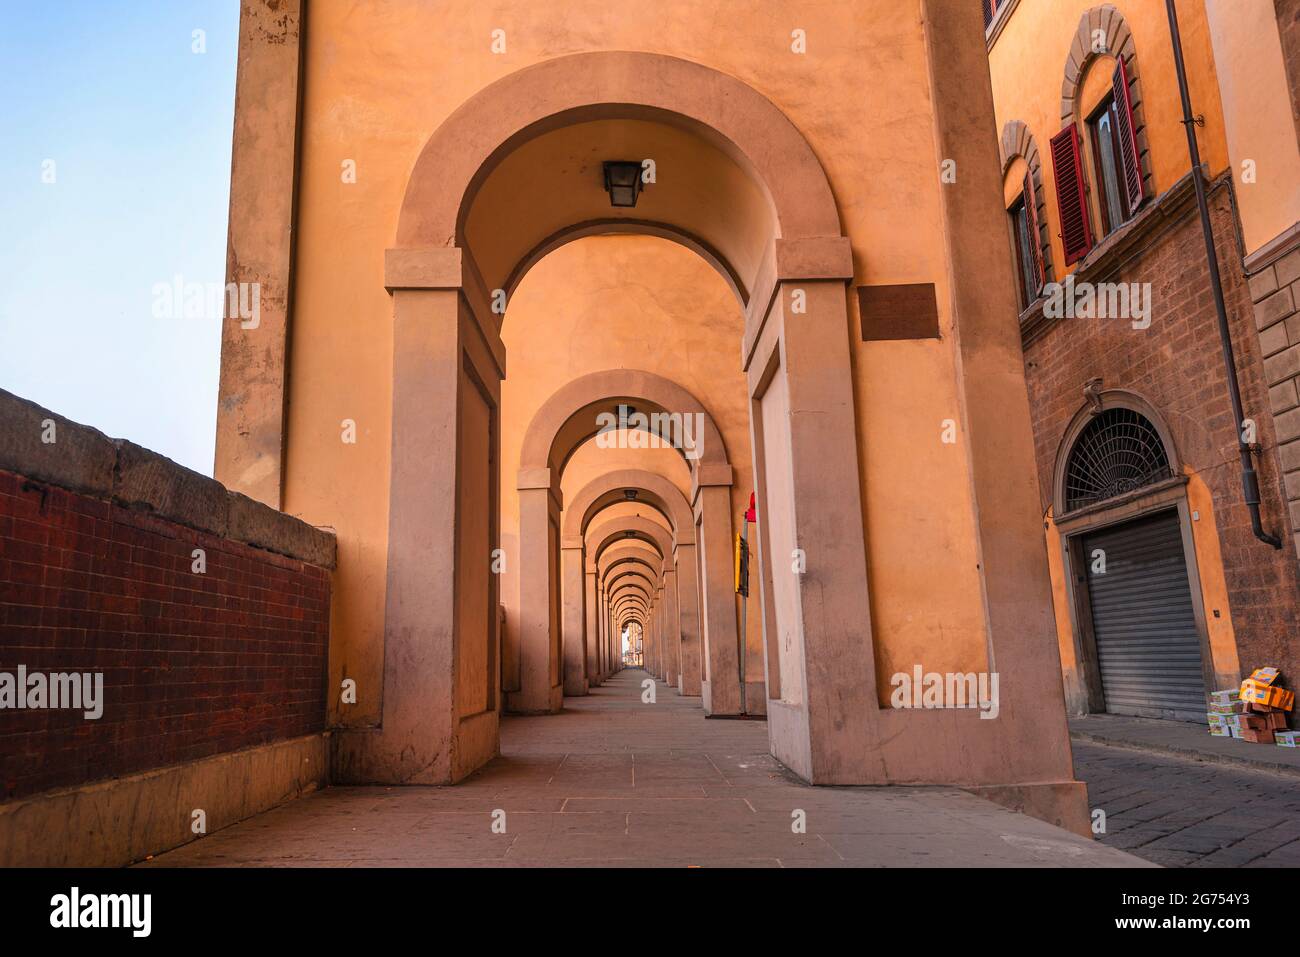 Corridoio Vasariano Passage, Florence, Italy. Beautiful symmetrical, warm yellow architecture. Vasari Corridor Stock Photo